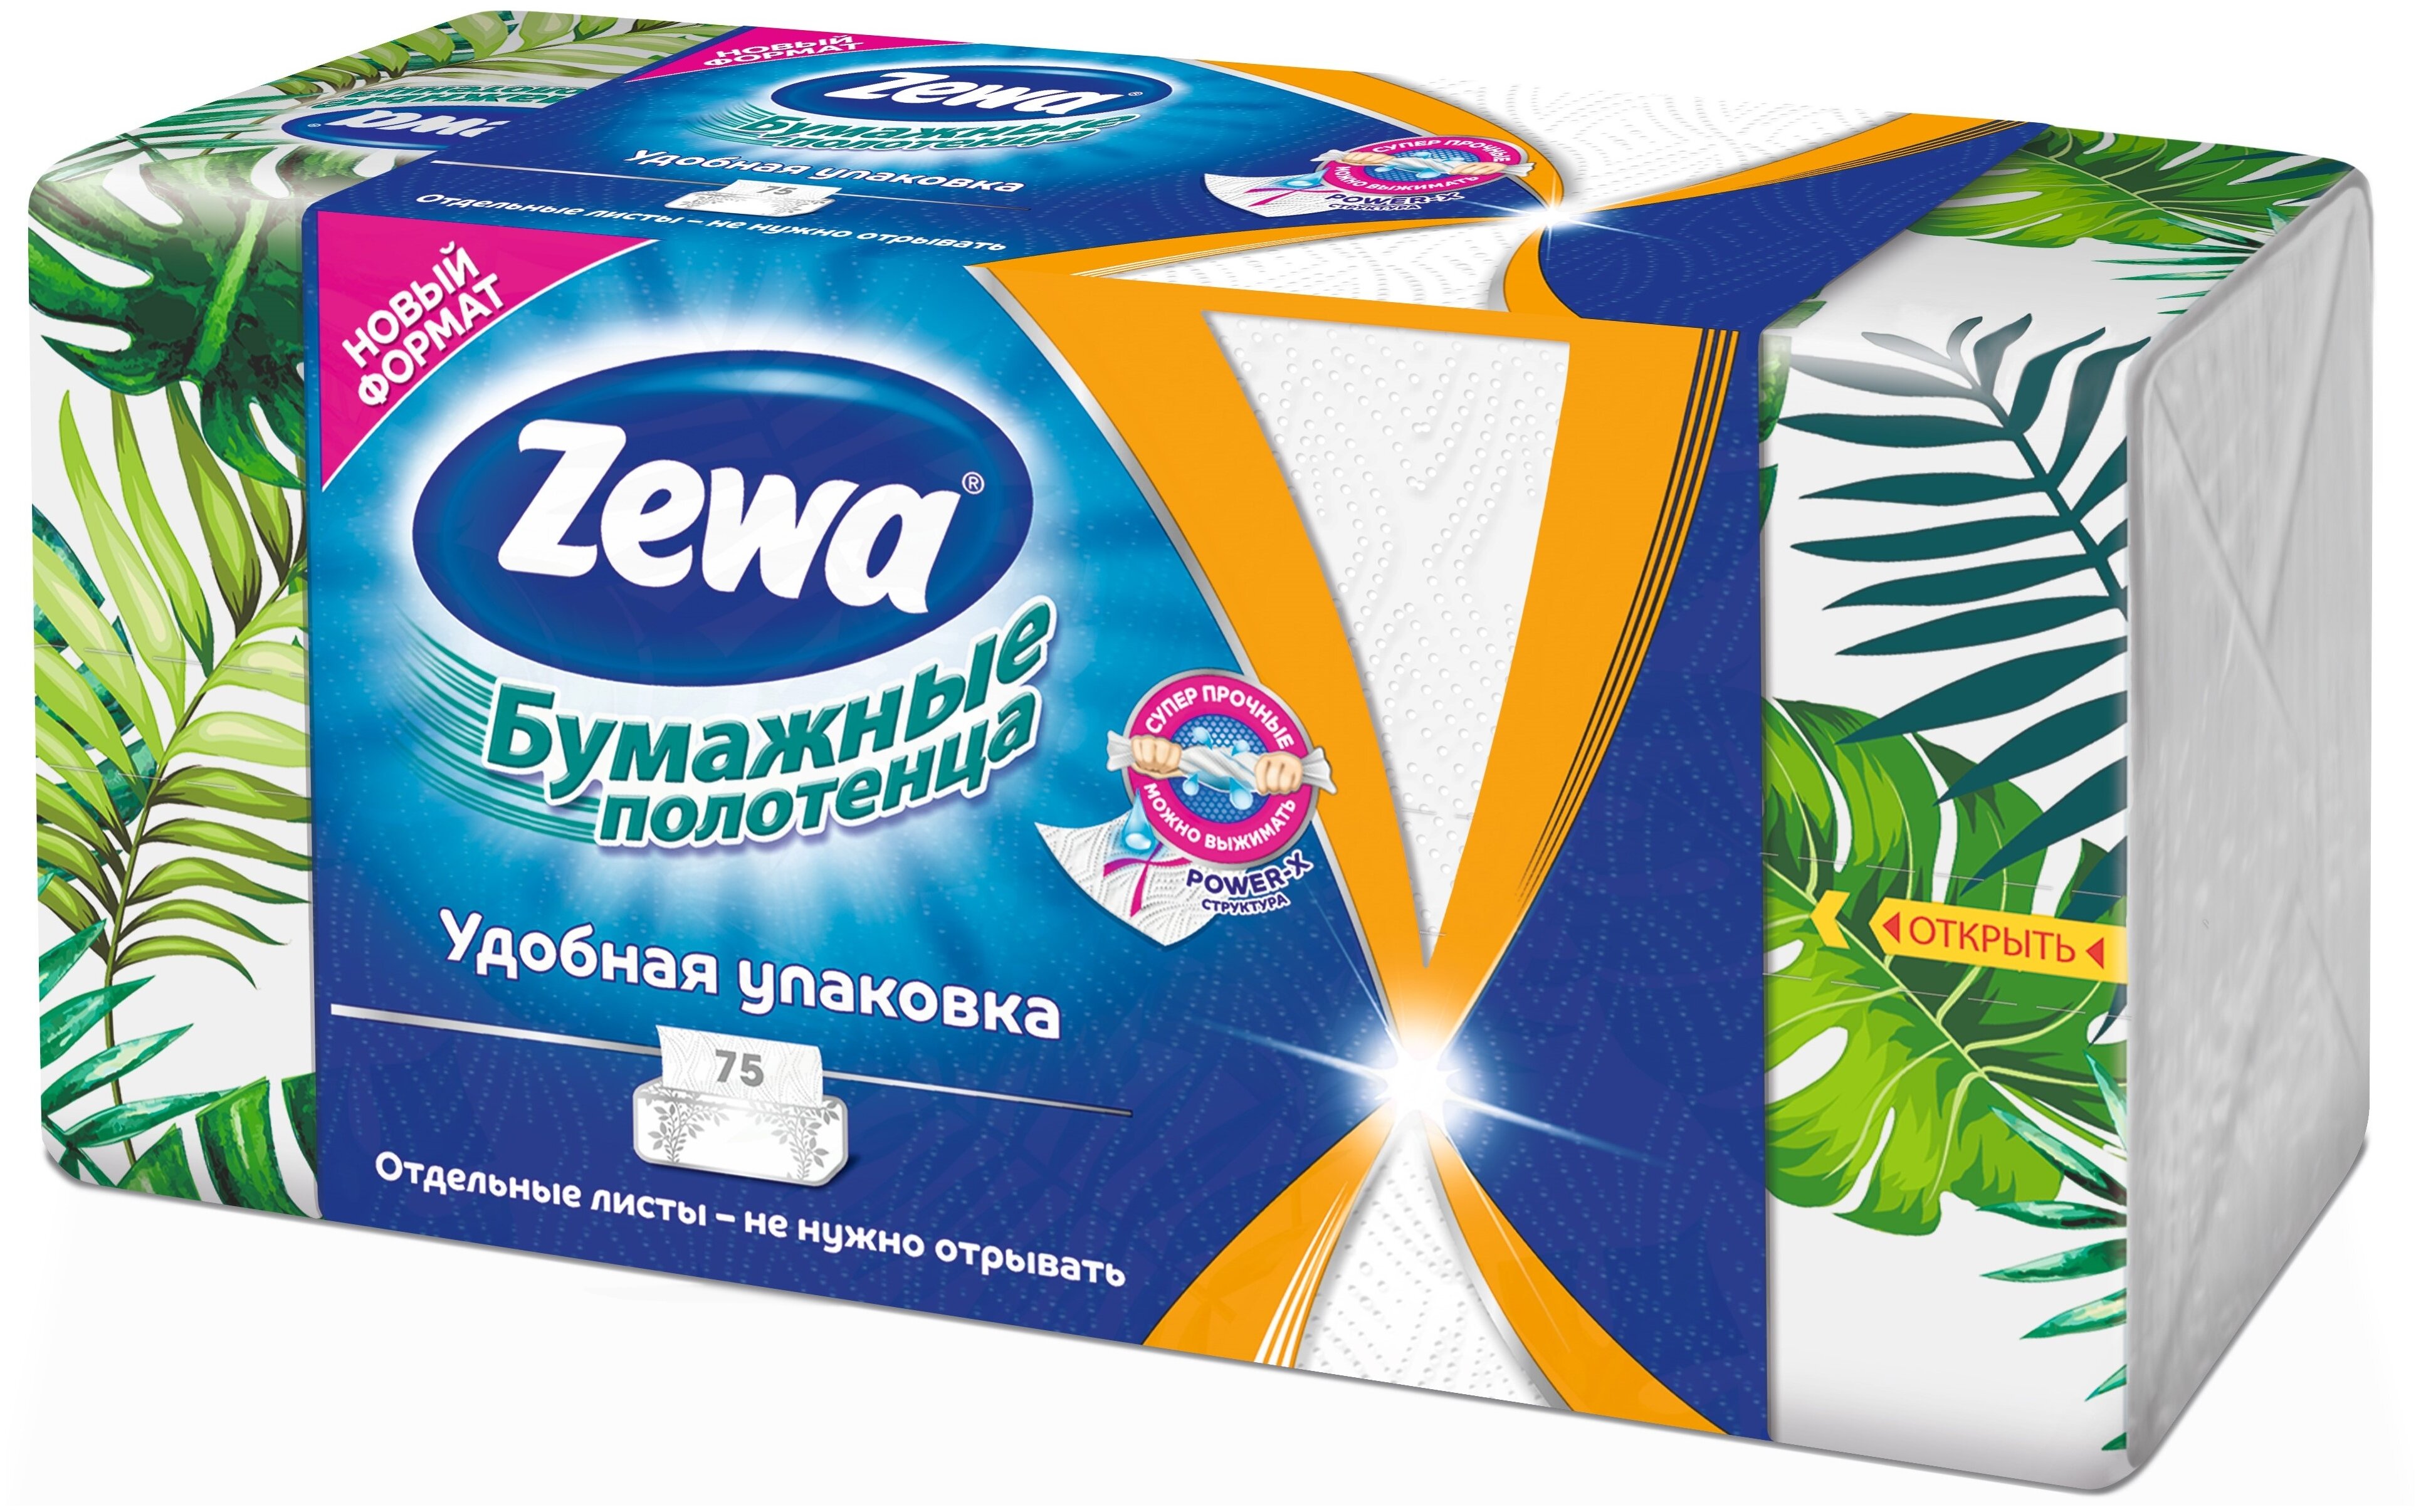 Zewa Wish&Weg "Удобная упаковка" - особенности: тиснение